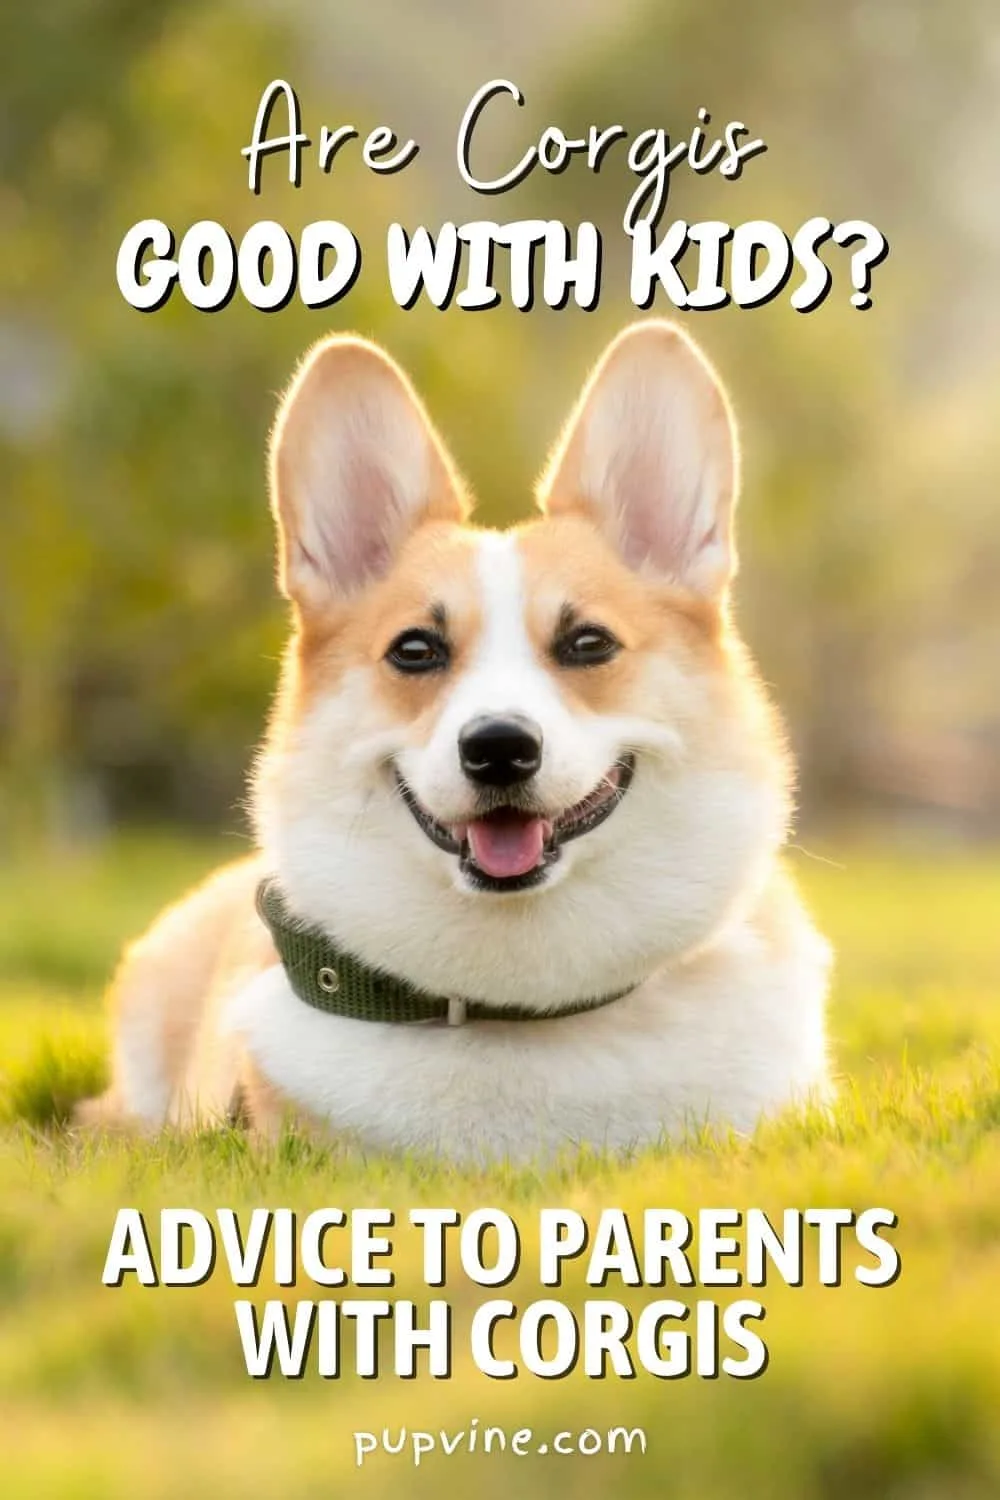 Are Corgis Good With Kids? Advice To Parents With Corgis